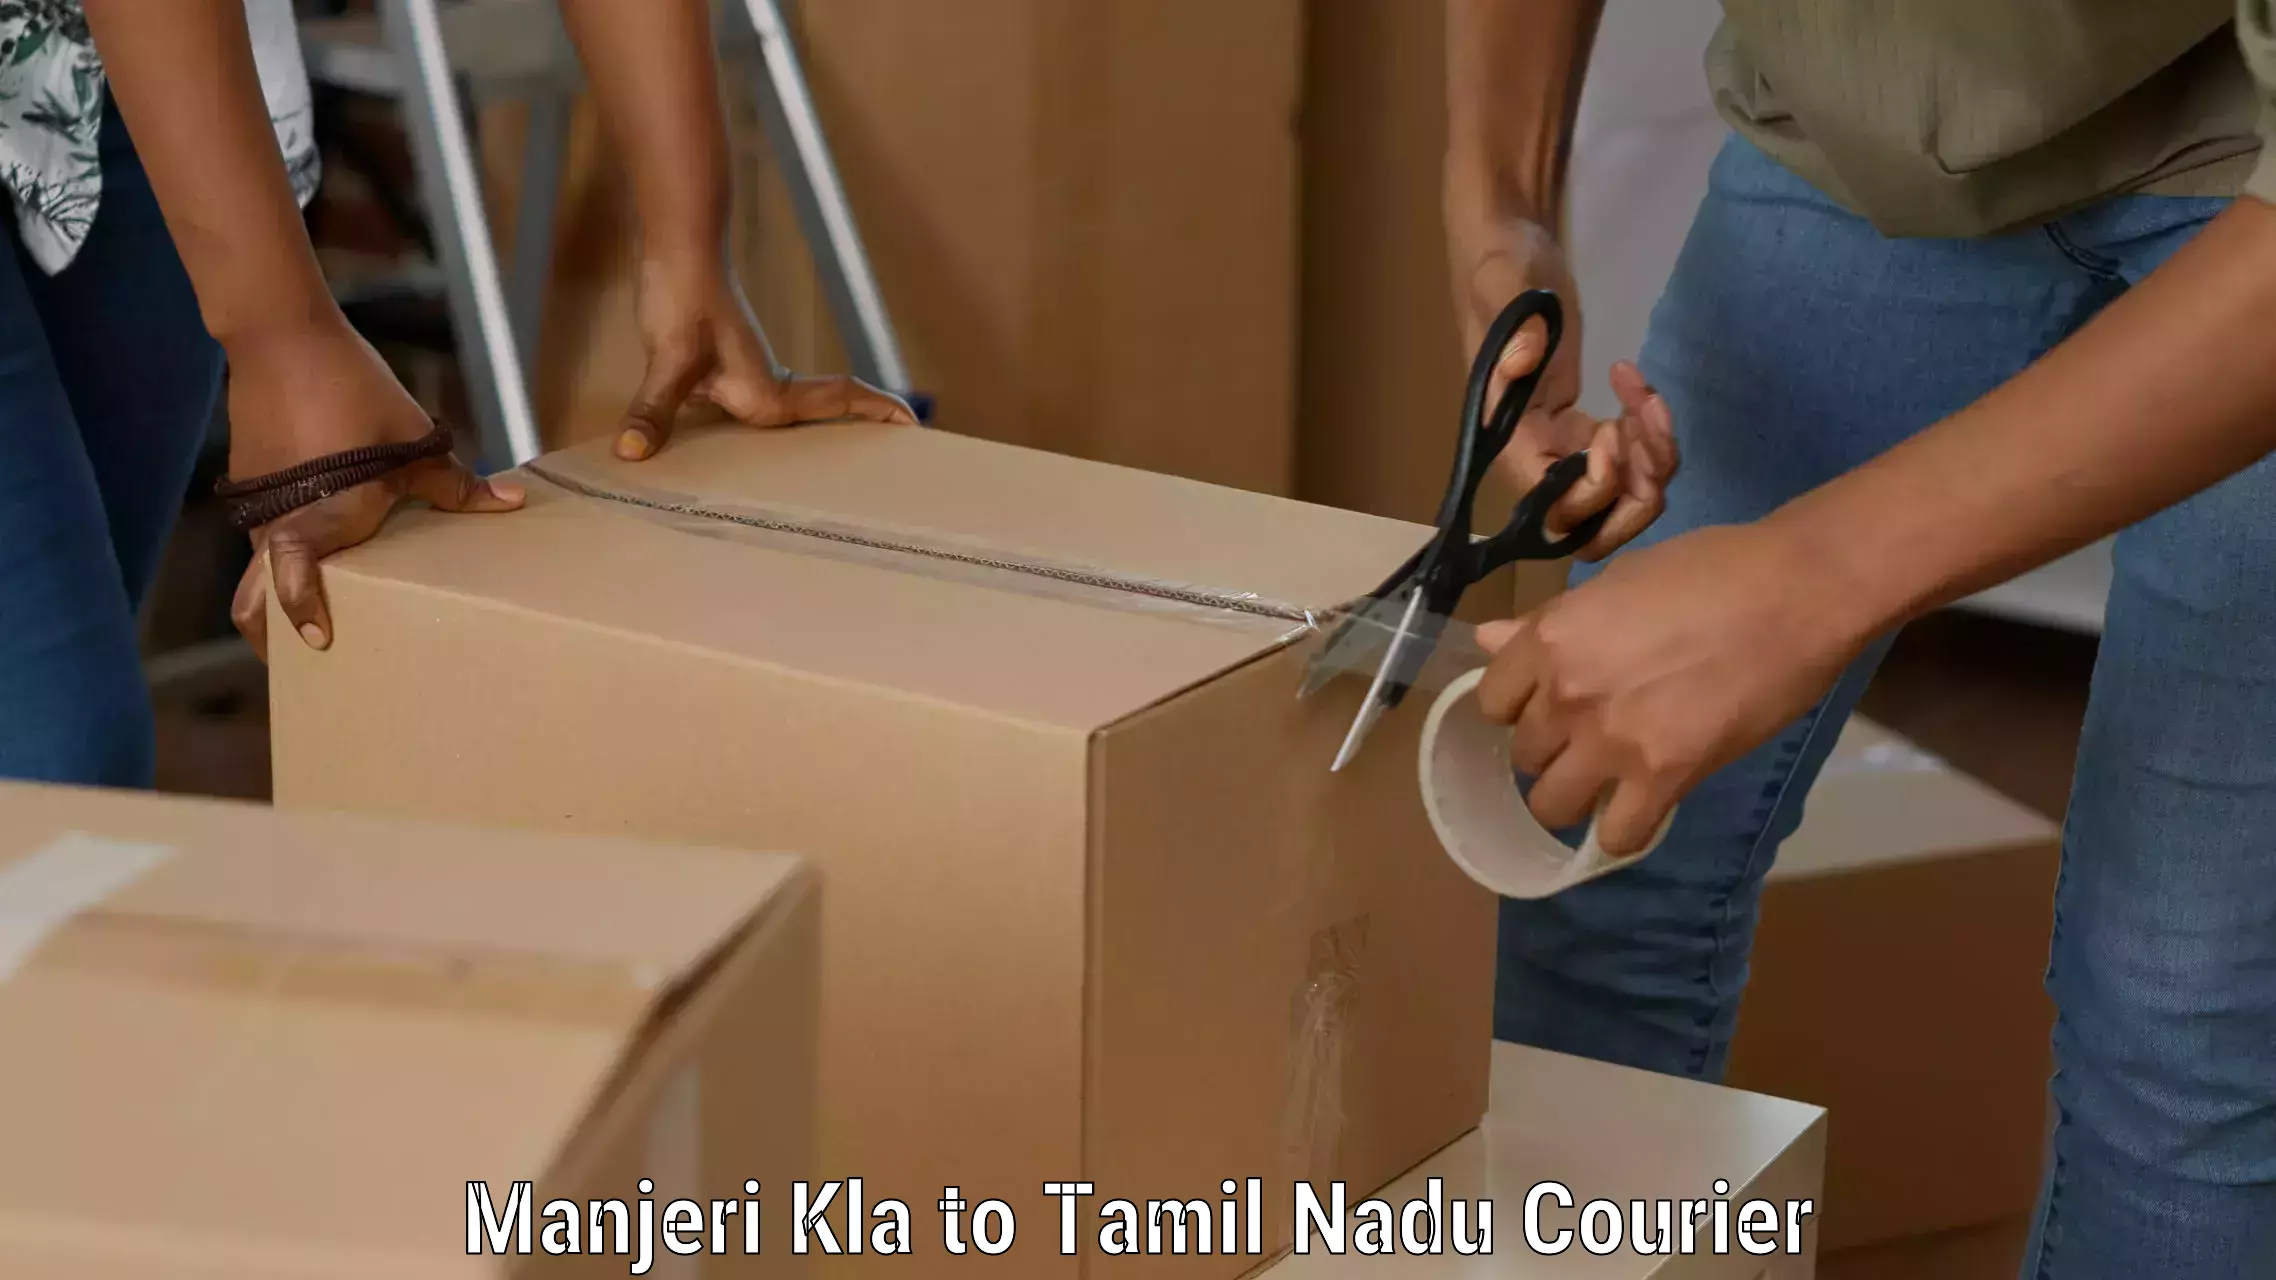 Courier service comparison Manjeri Kla to Viluppuram